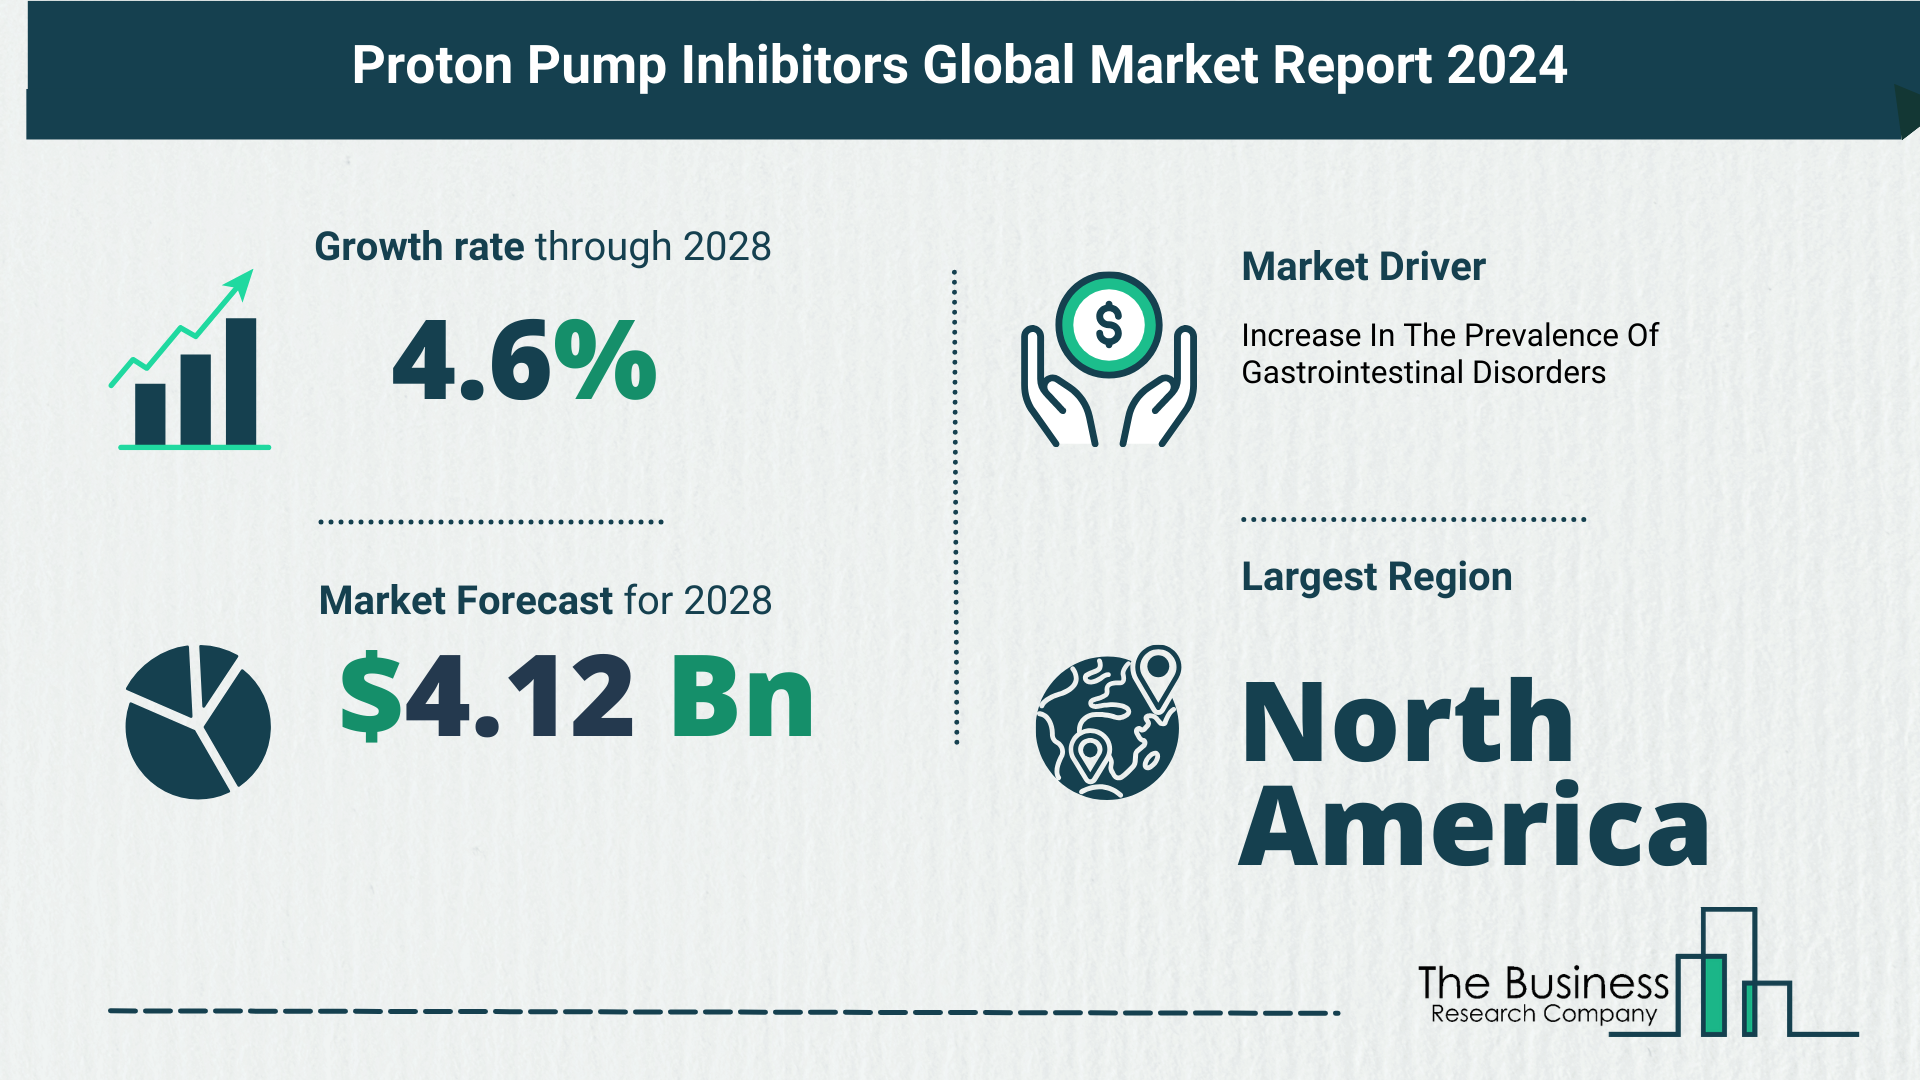 Key Takeaways From The Global Proton Pump Inhibitors Market Forecast 2024